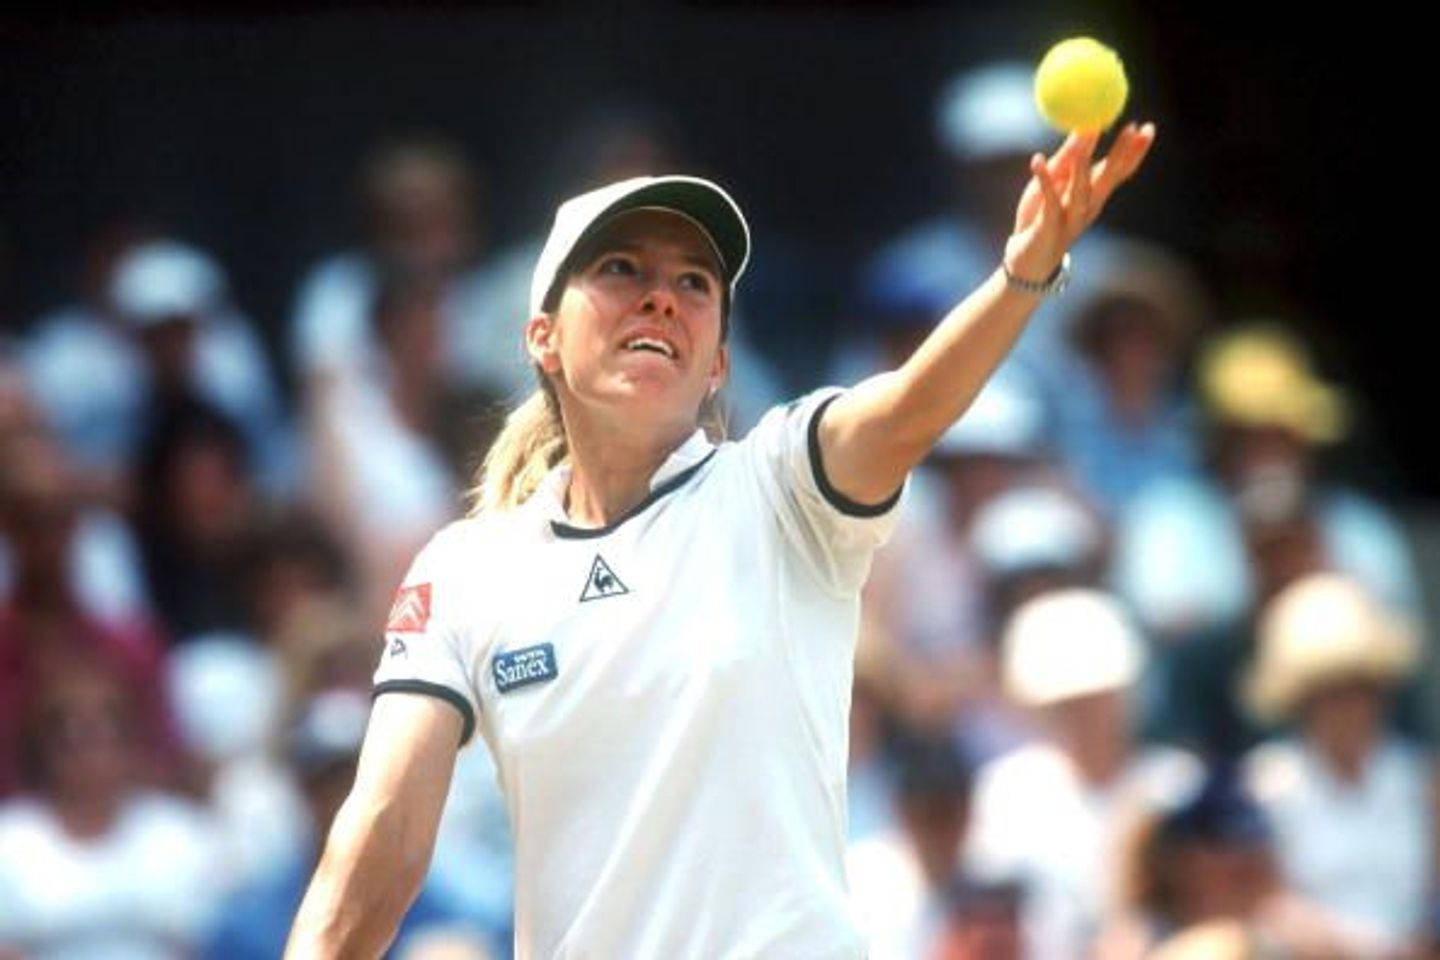 Serviciode Tenis De Justine Henin Fondo de pantalla